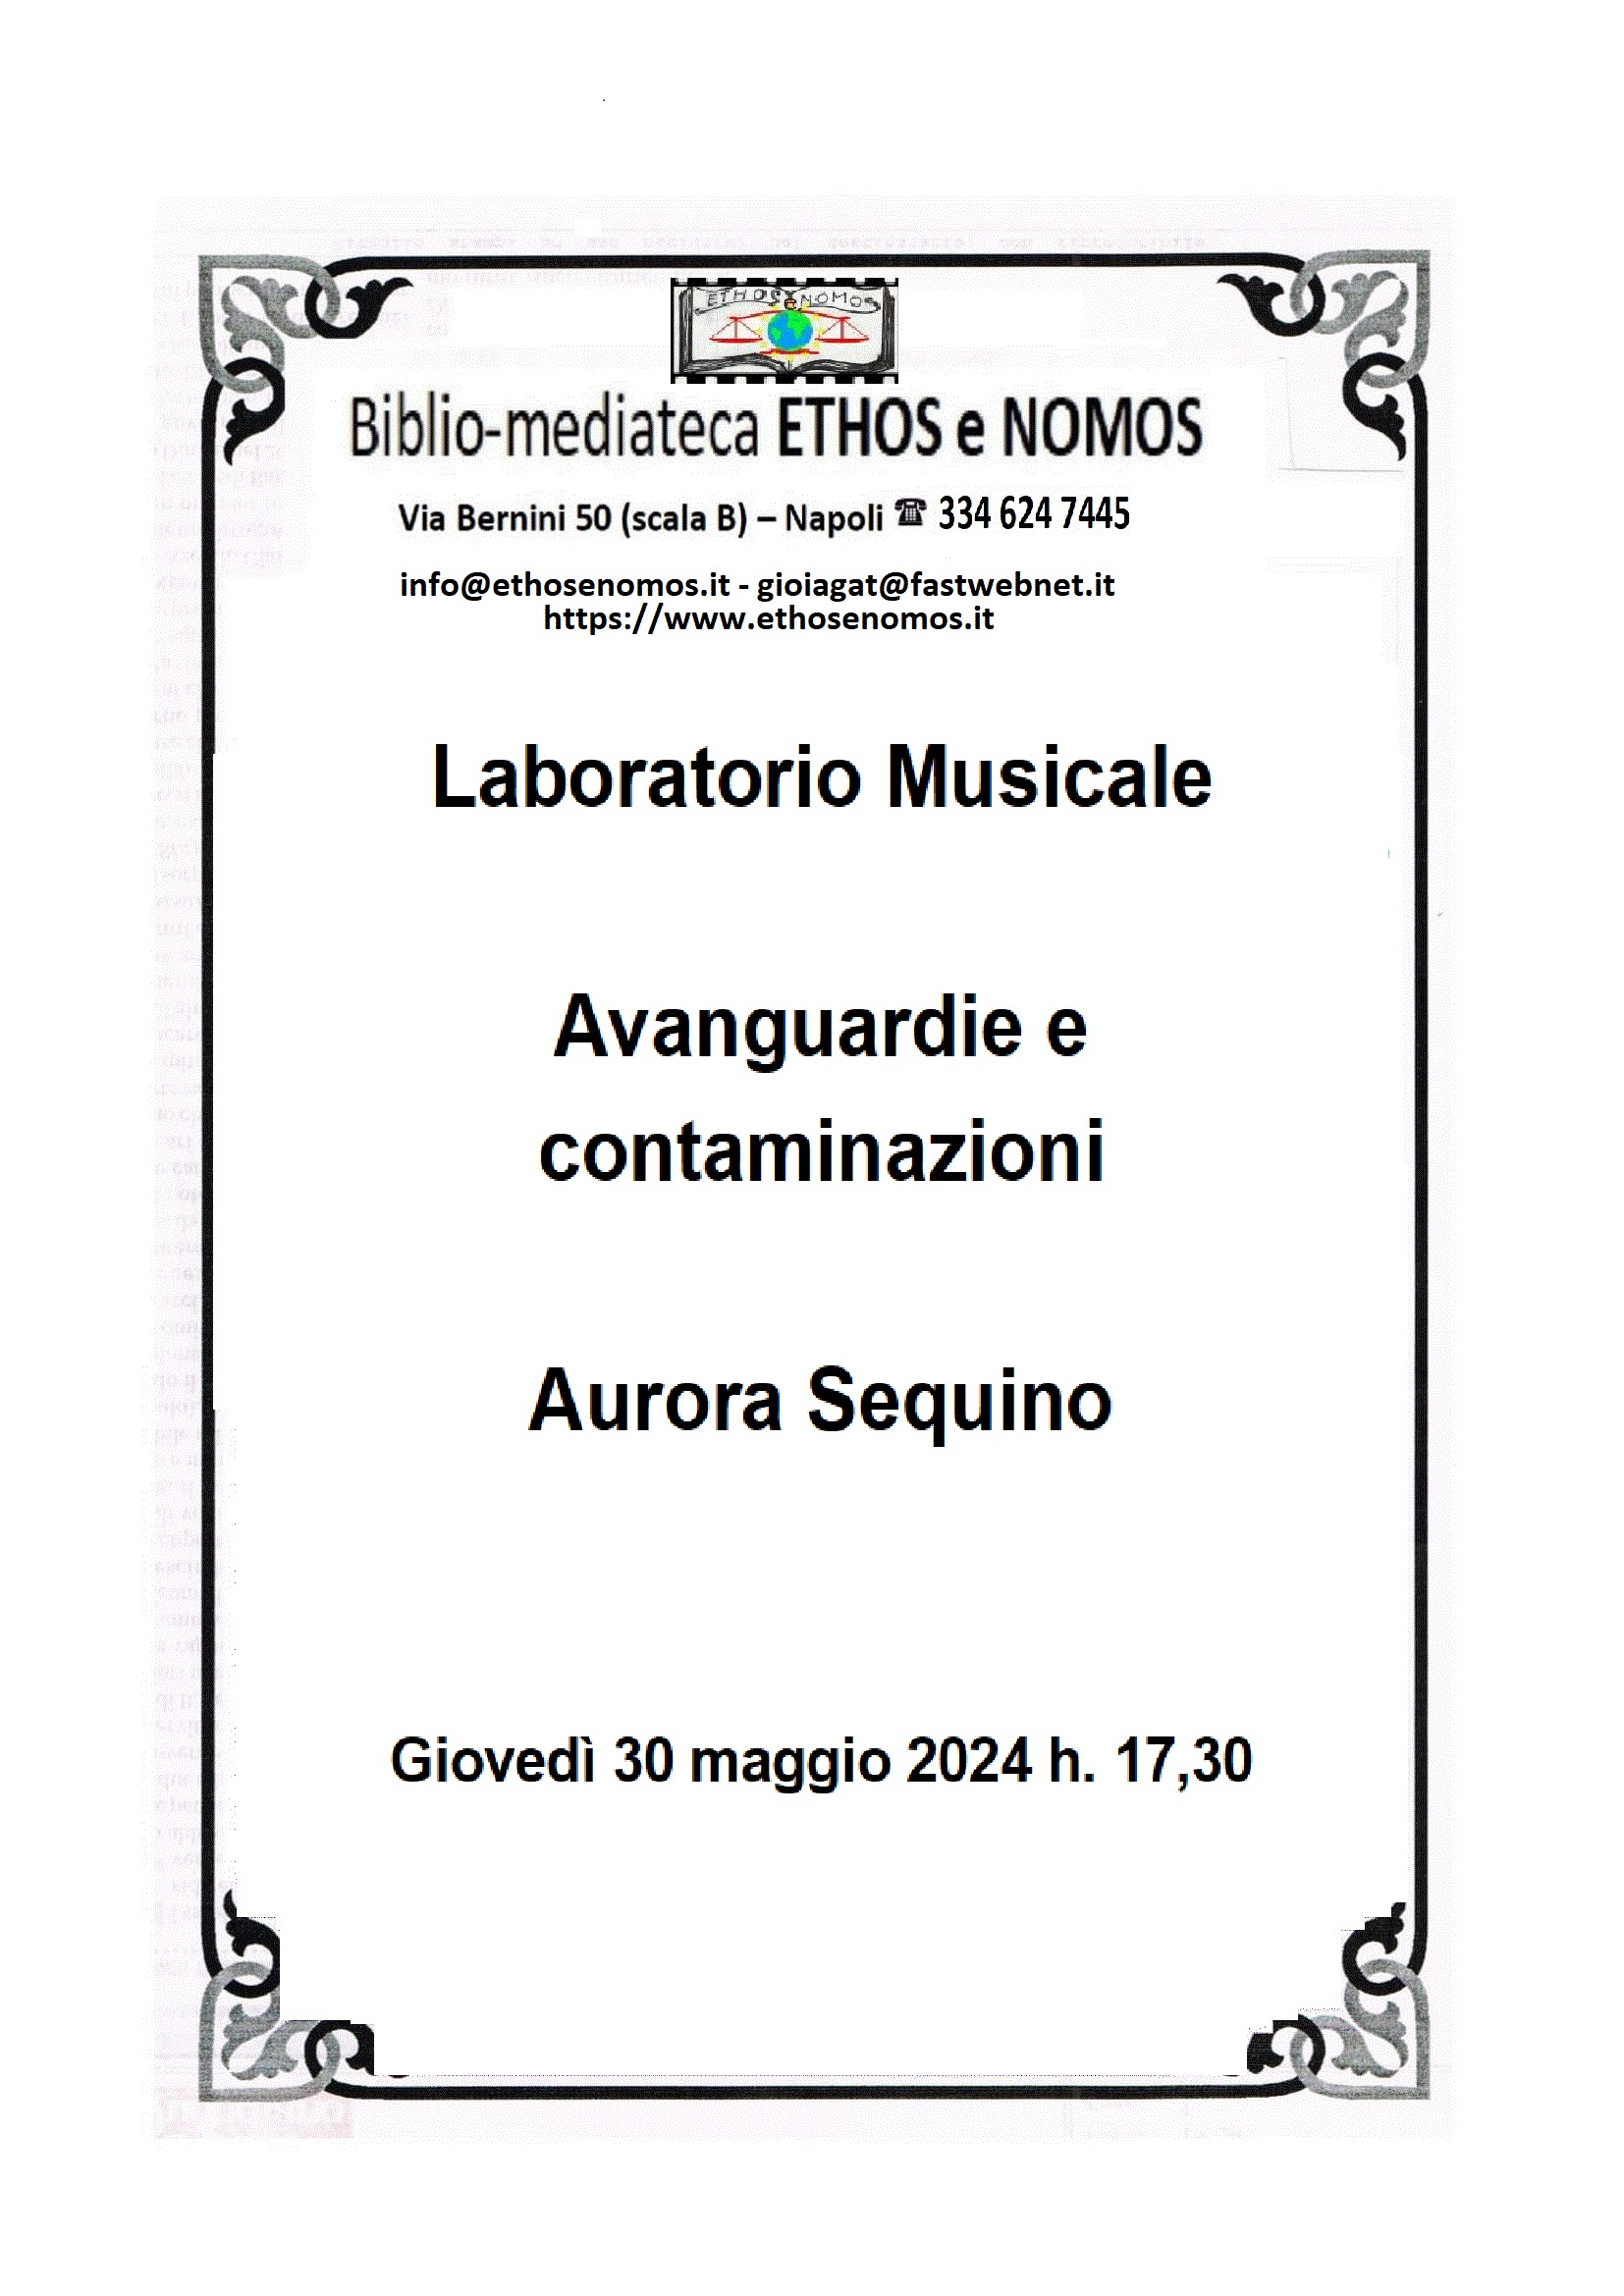 Aurora Sequino - Laboratorio musicale: Avanguardia e contaminazioni